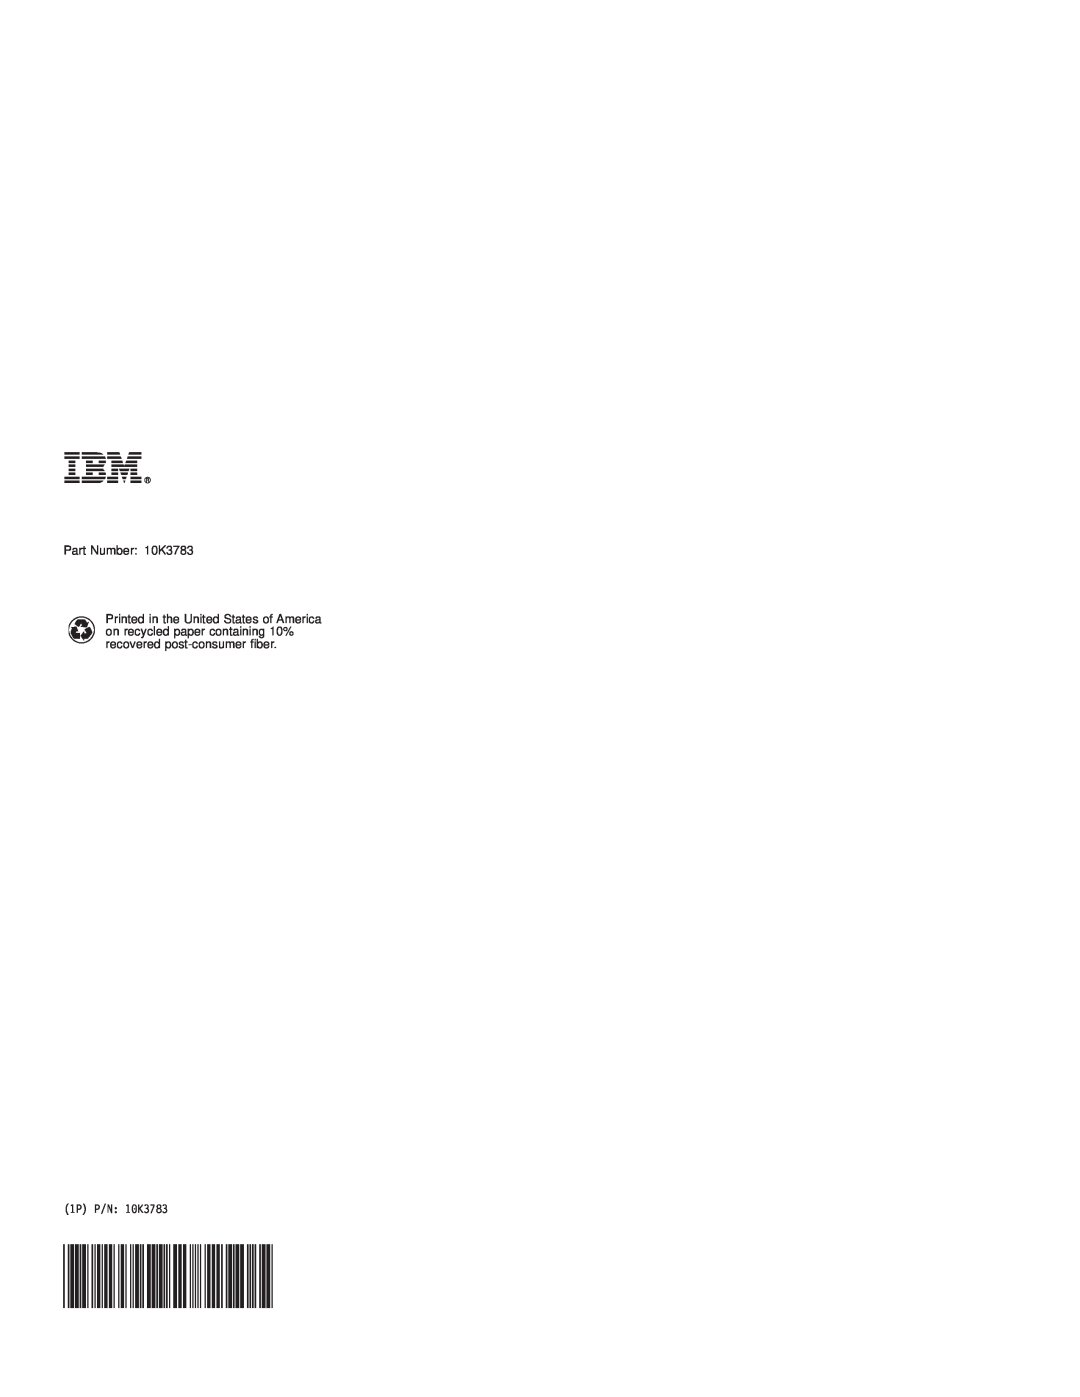 IBM 48X-20X manual Ibmr, Part Number 10K3783, 1P P/N 10K3783 